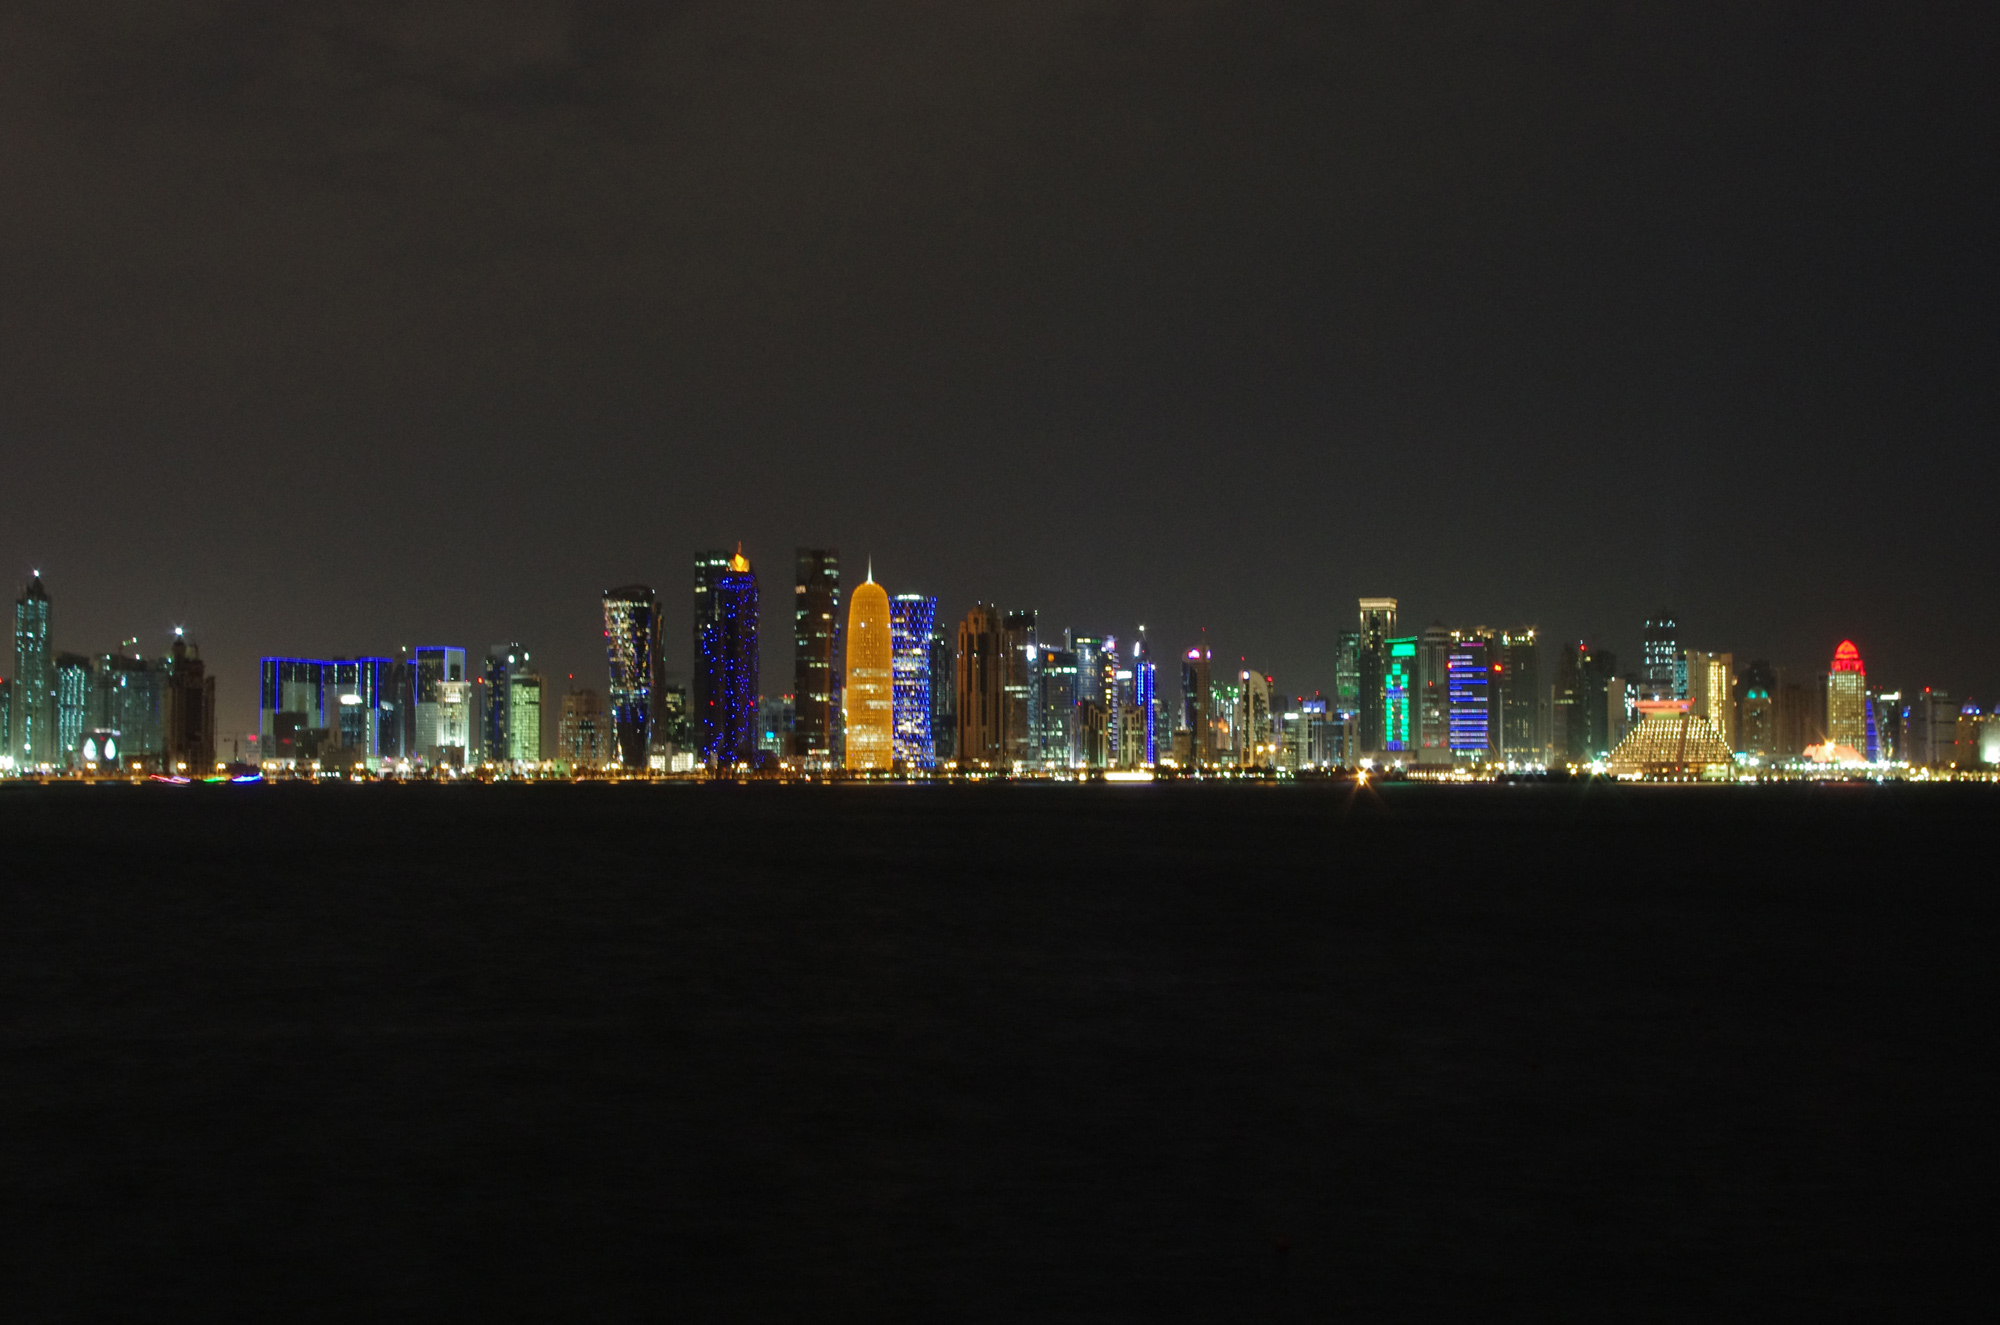 The Doha skyline at night.